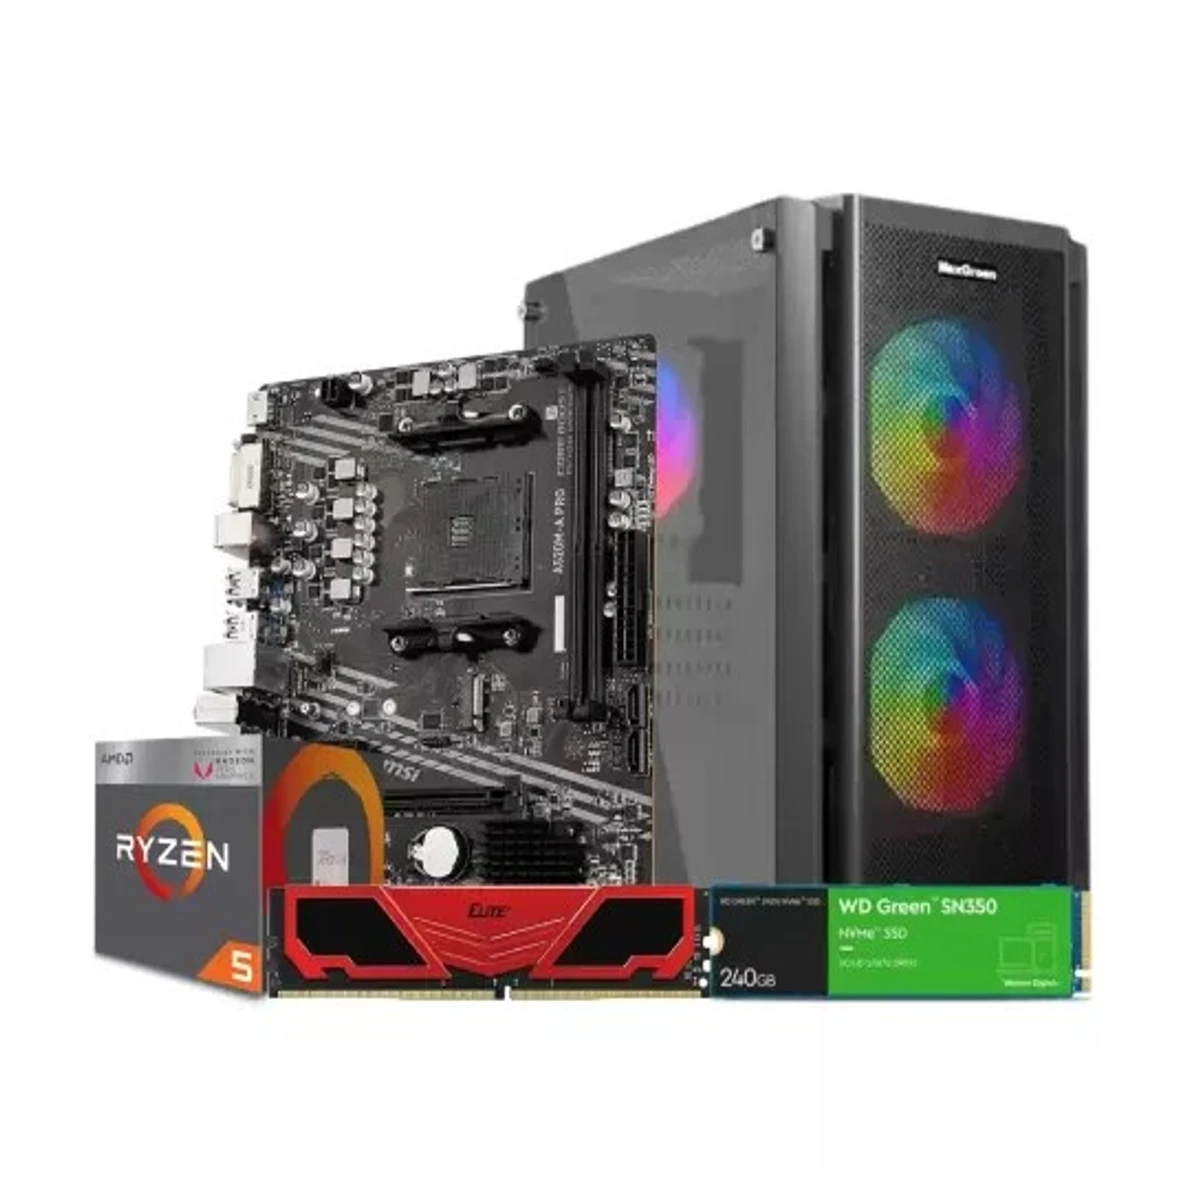 AMD Ryzen 5 2400G Budget Gaming Desktop PC